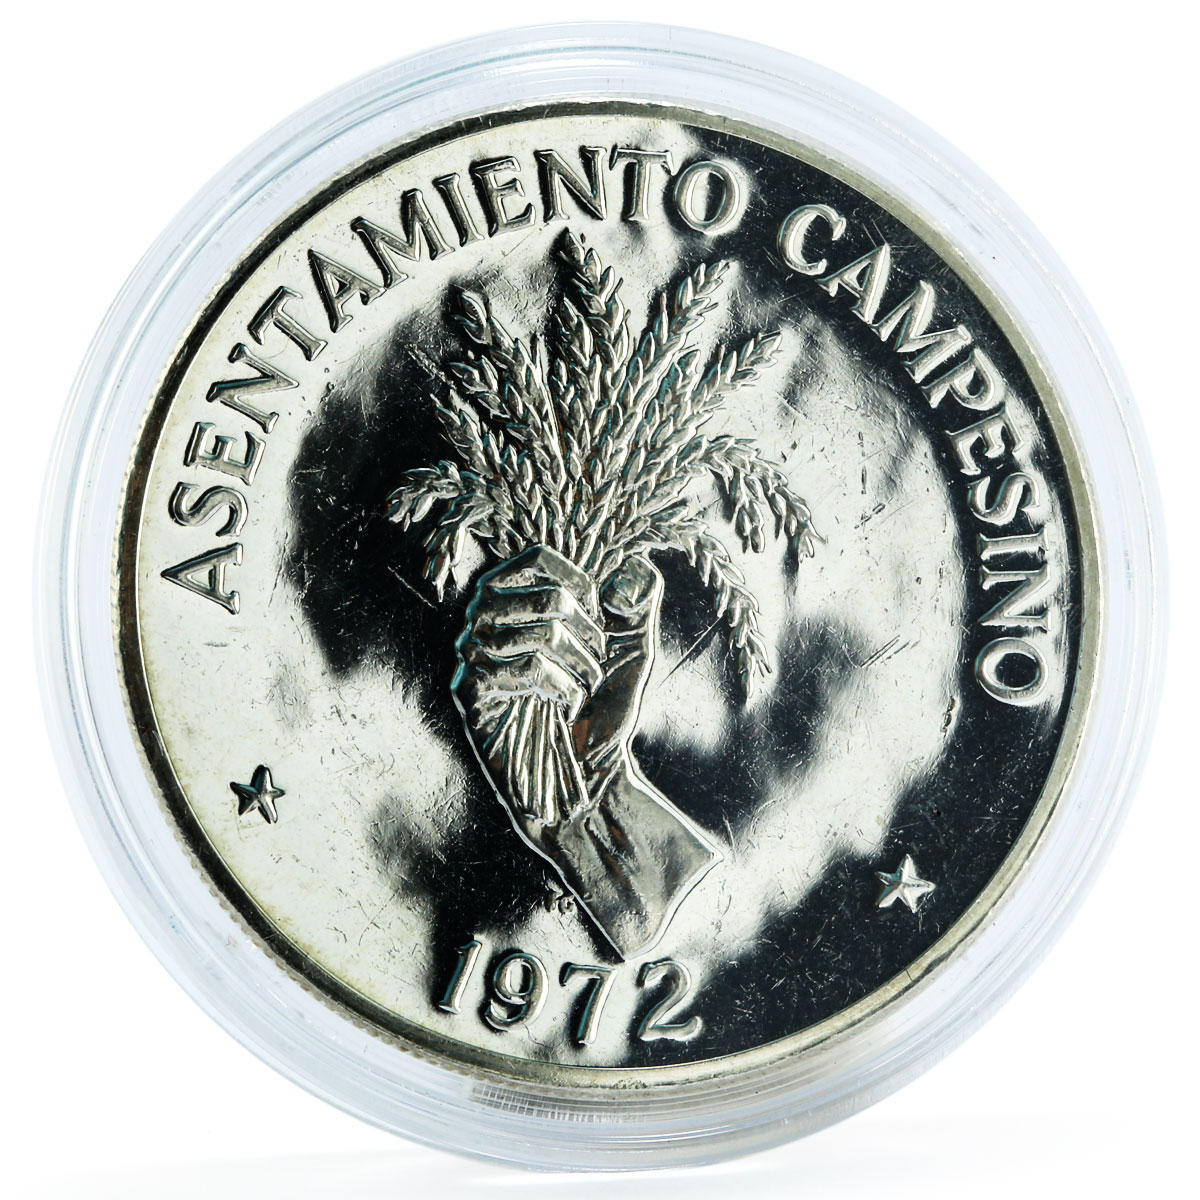 Panama 5 balboas Peasant Settlements series Hand Holding Crops silver coin 1972